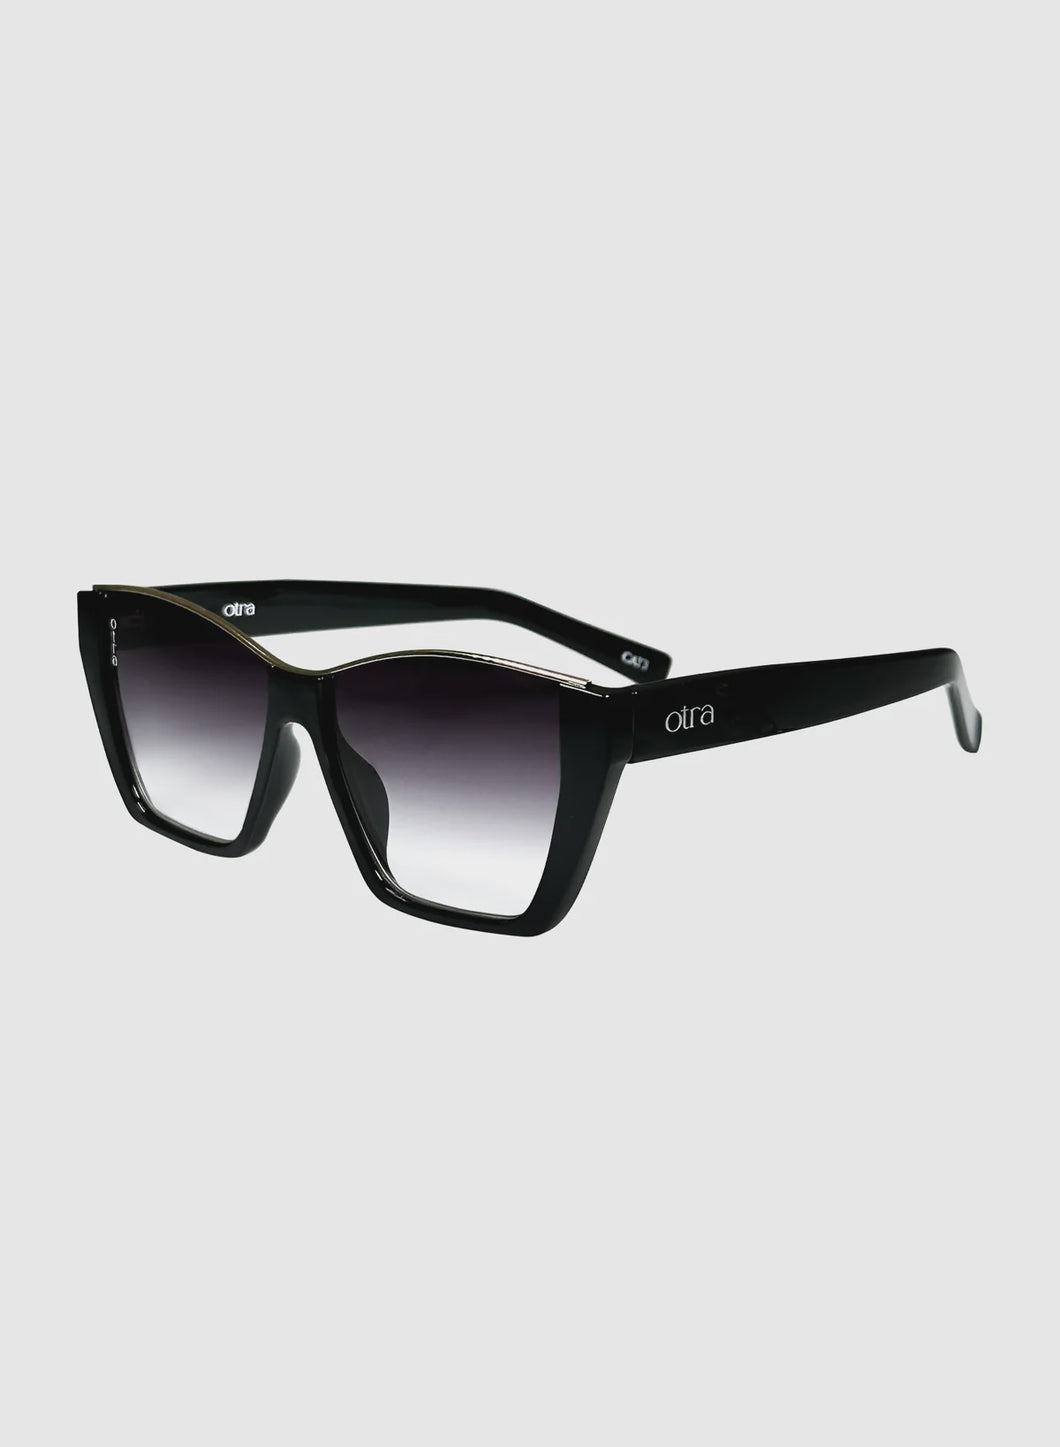 Otra Eyewear Sunglasses Belle Black/Smoke